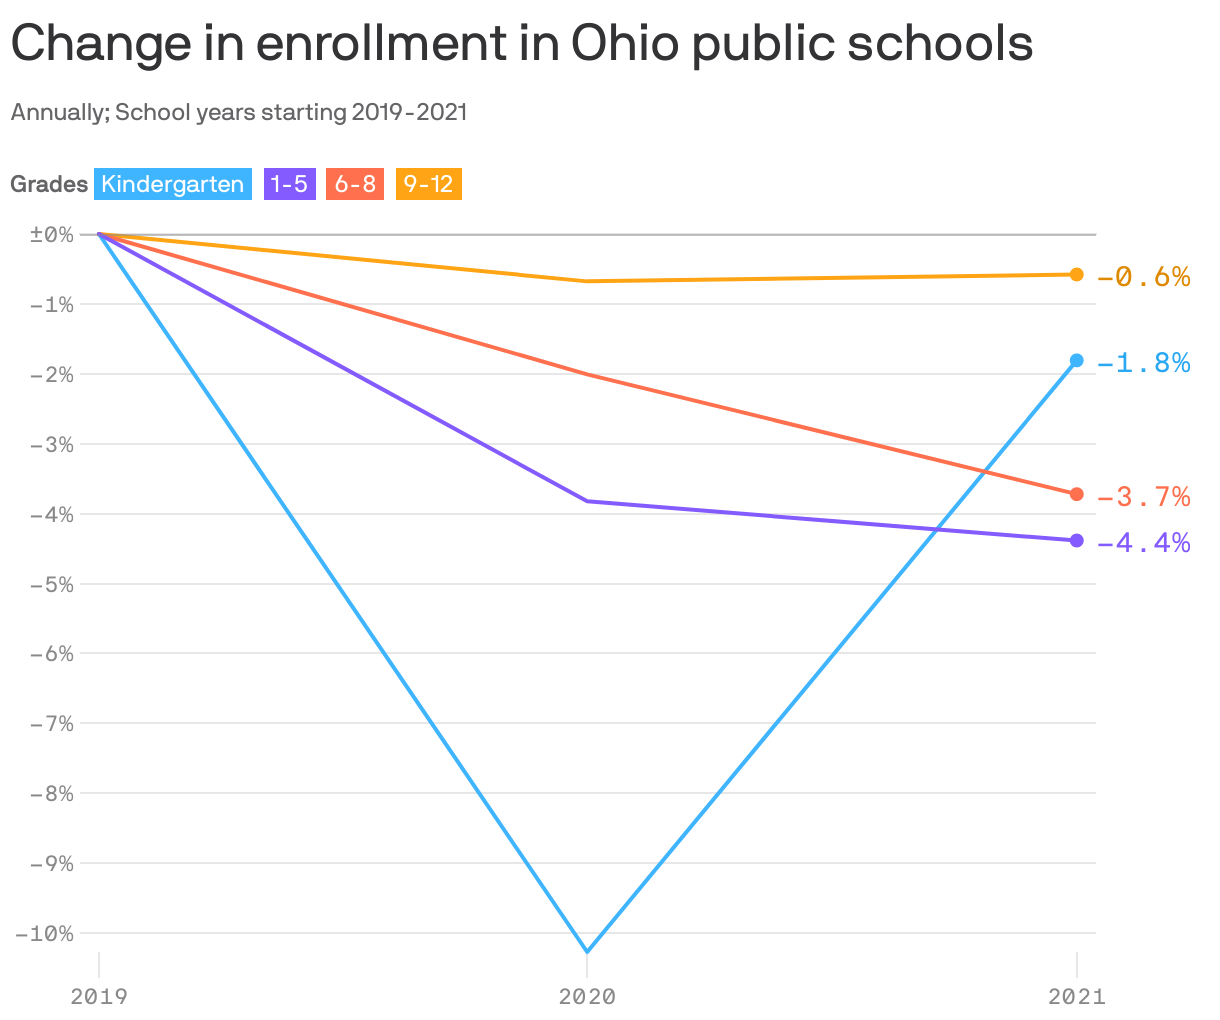 Change in enrollment in Ohio public schools